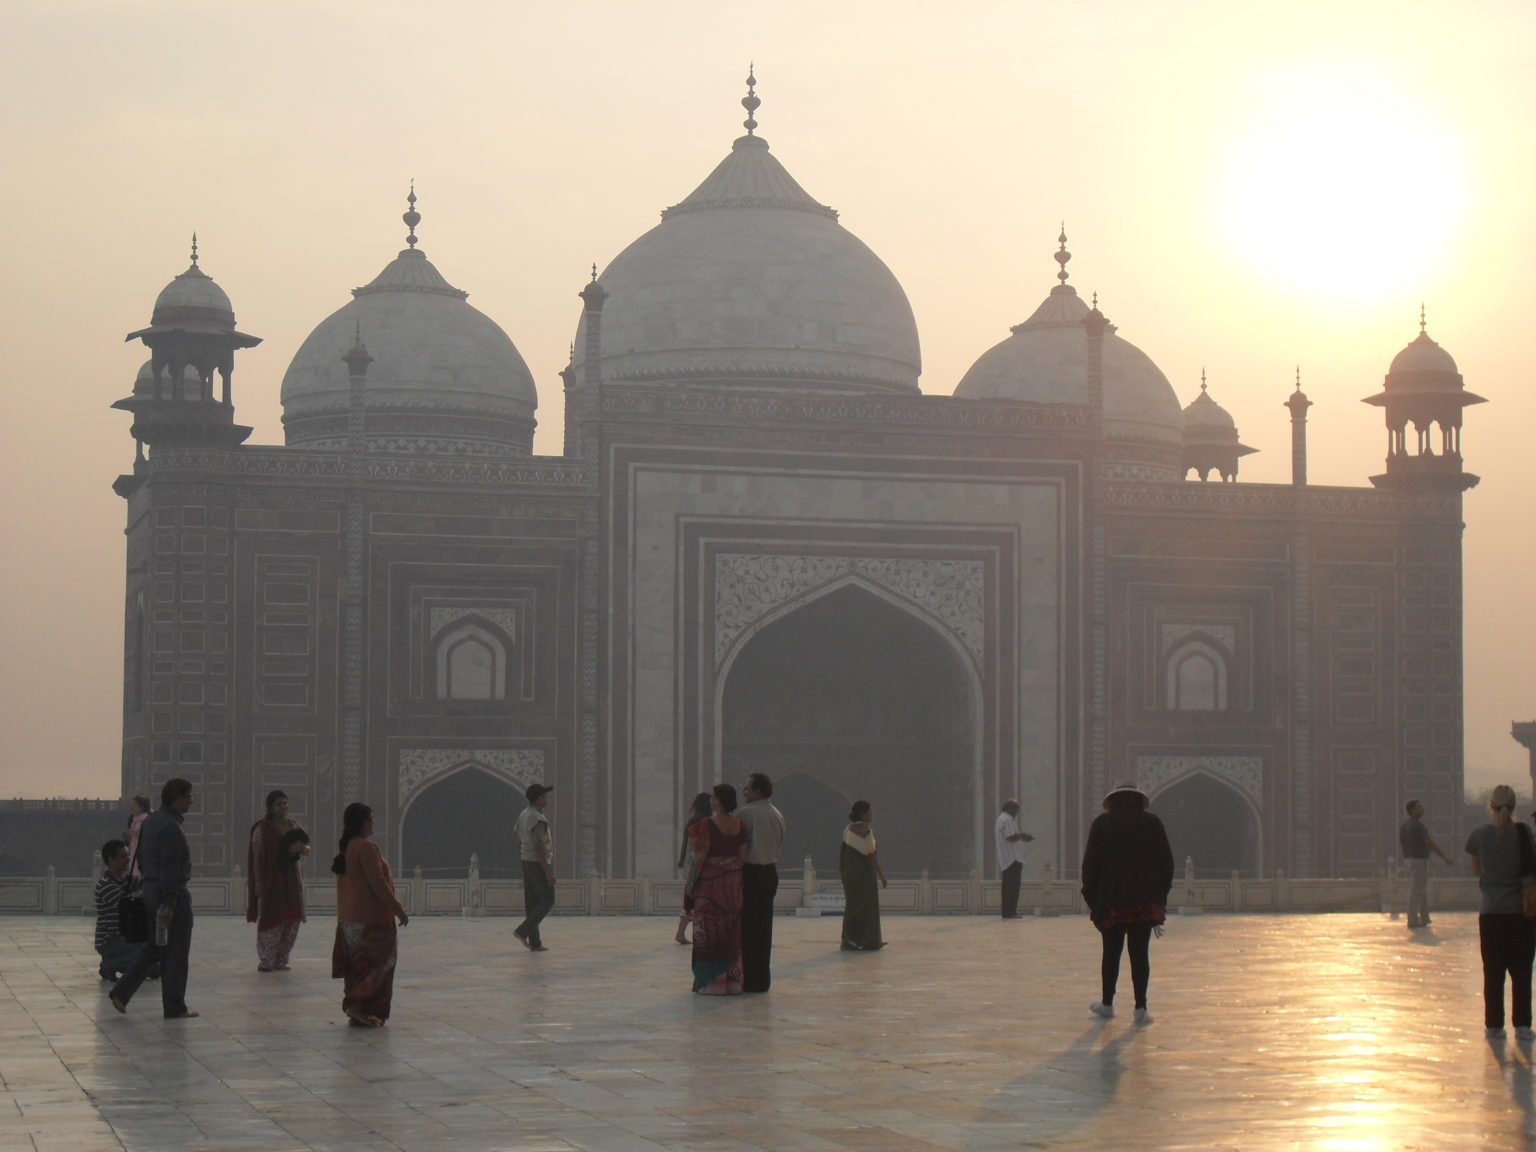 entry to the Taj Mahal as dawn breaks